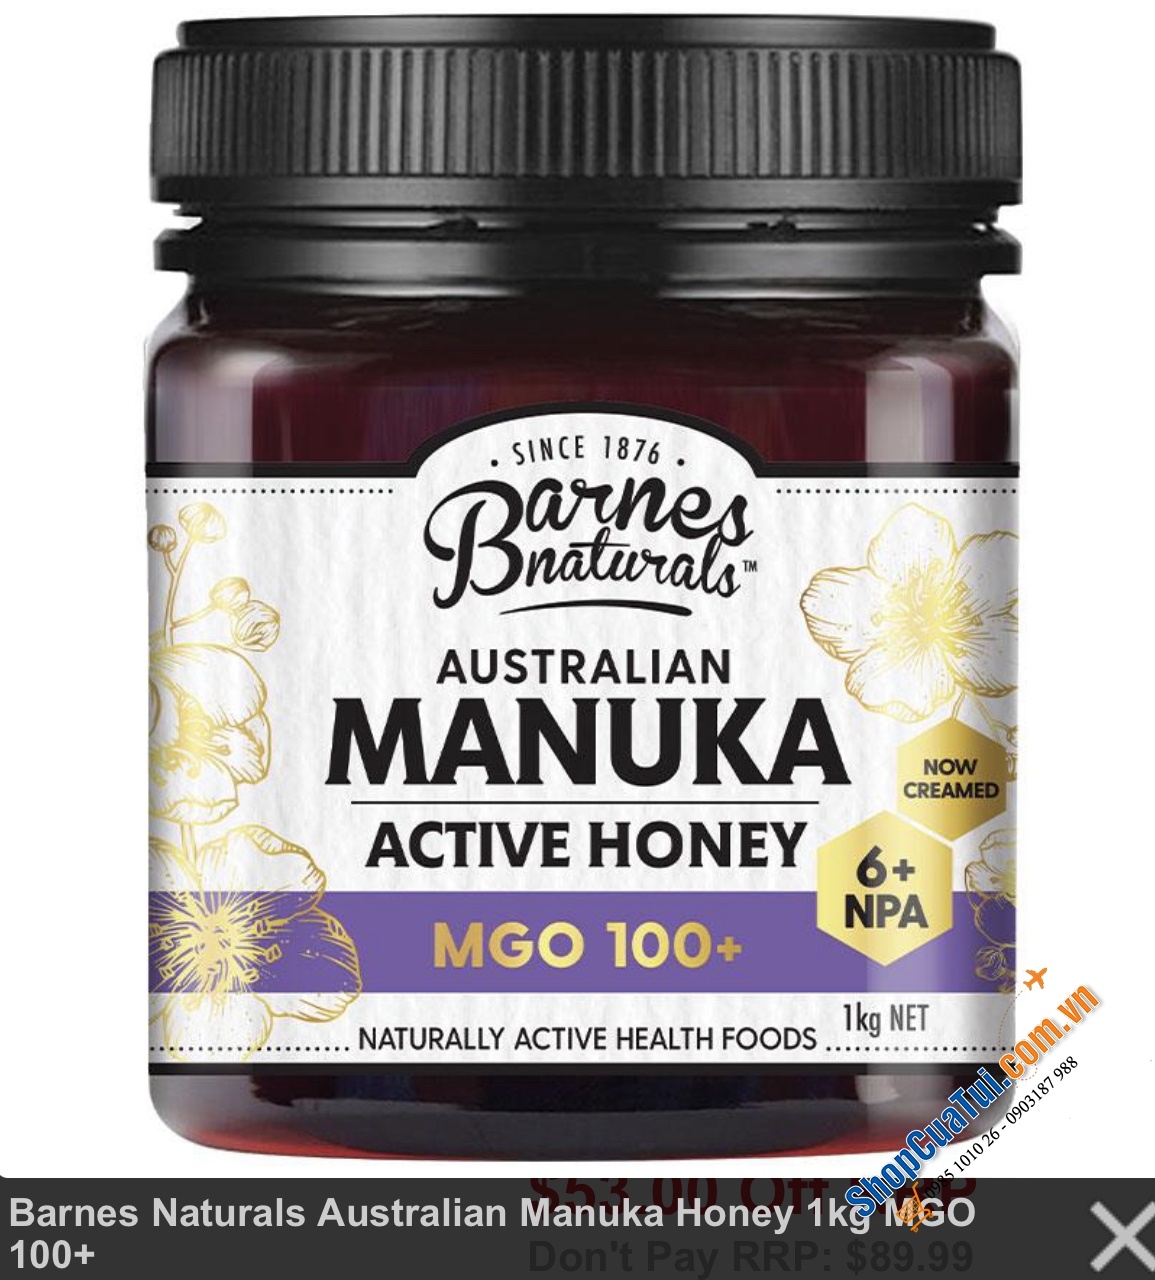 Mật ong Barnes Naturals Australian Manuka Honey 1kg MGO 100+ tương đương NPA 6+